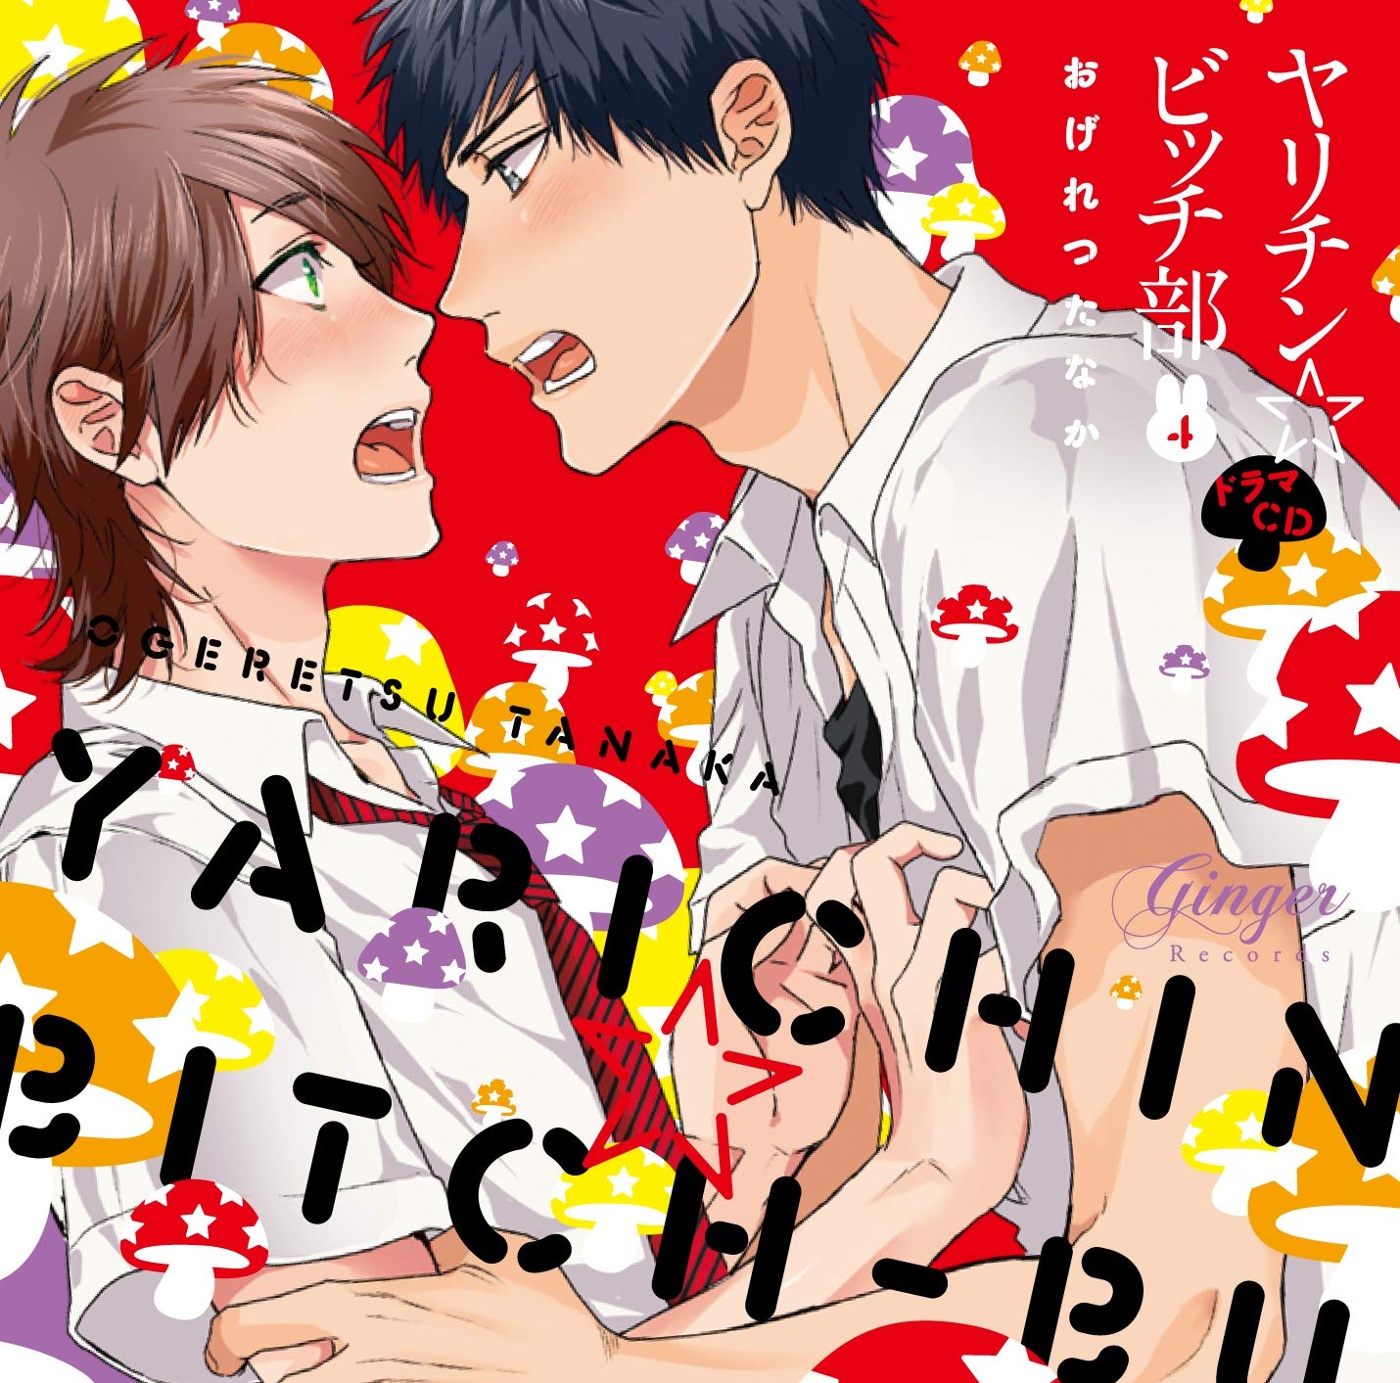 O.s.t: Drama Cd: Vol.4 - Yarichin Bitch Club (Japan-import) купить в интерн...